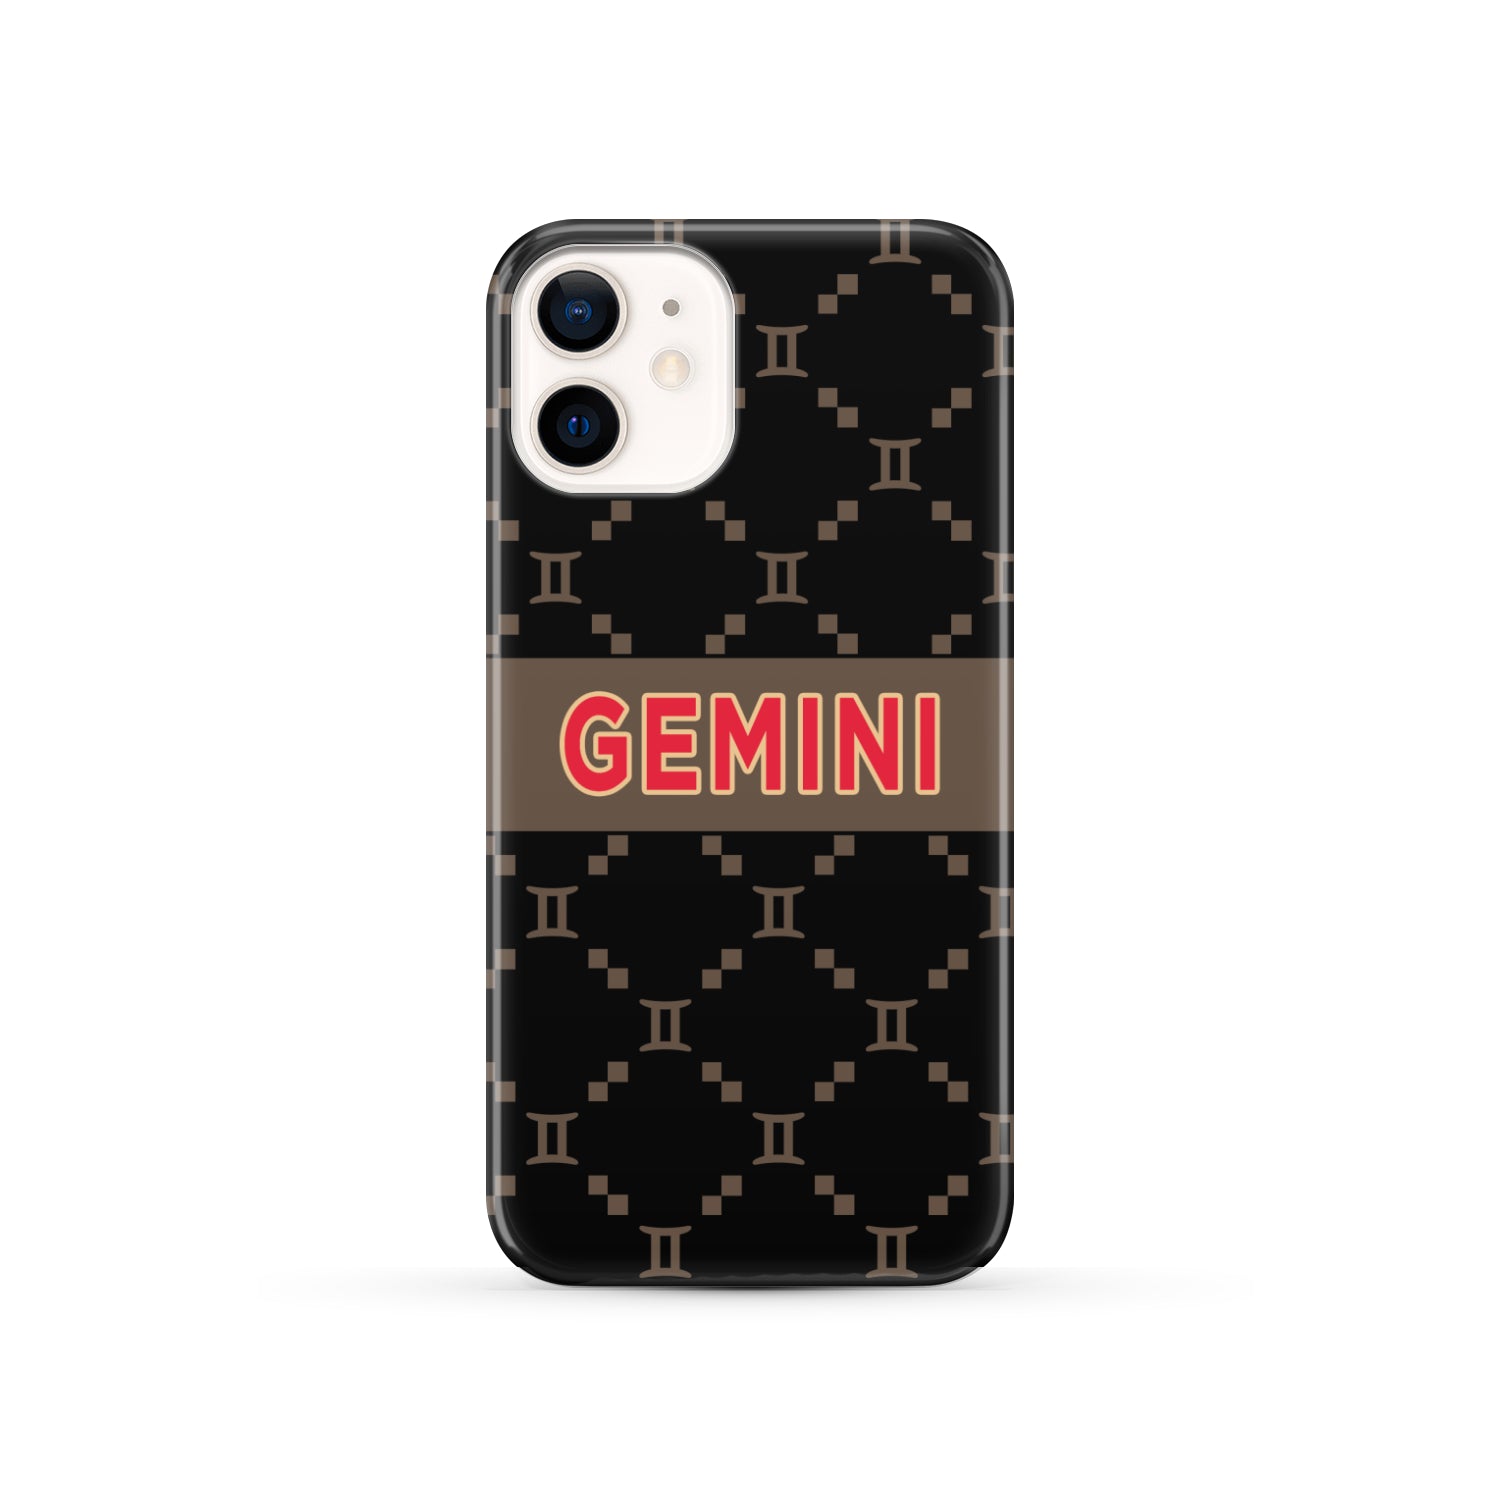 Gemini G-Style Black Phone Case